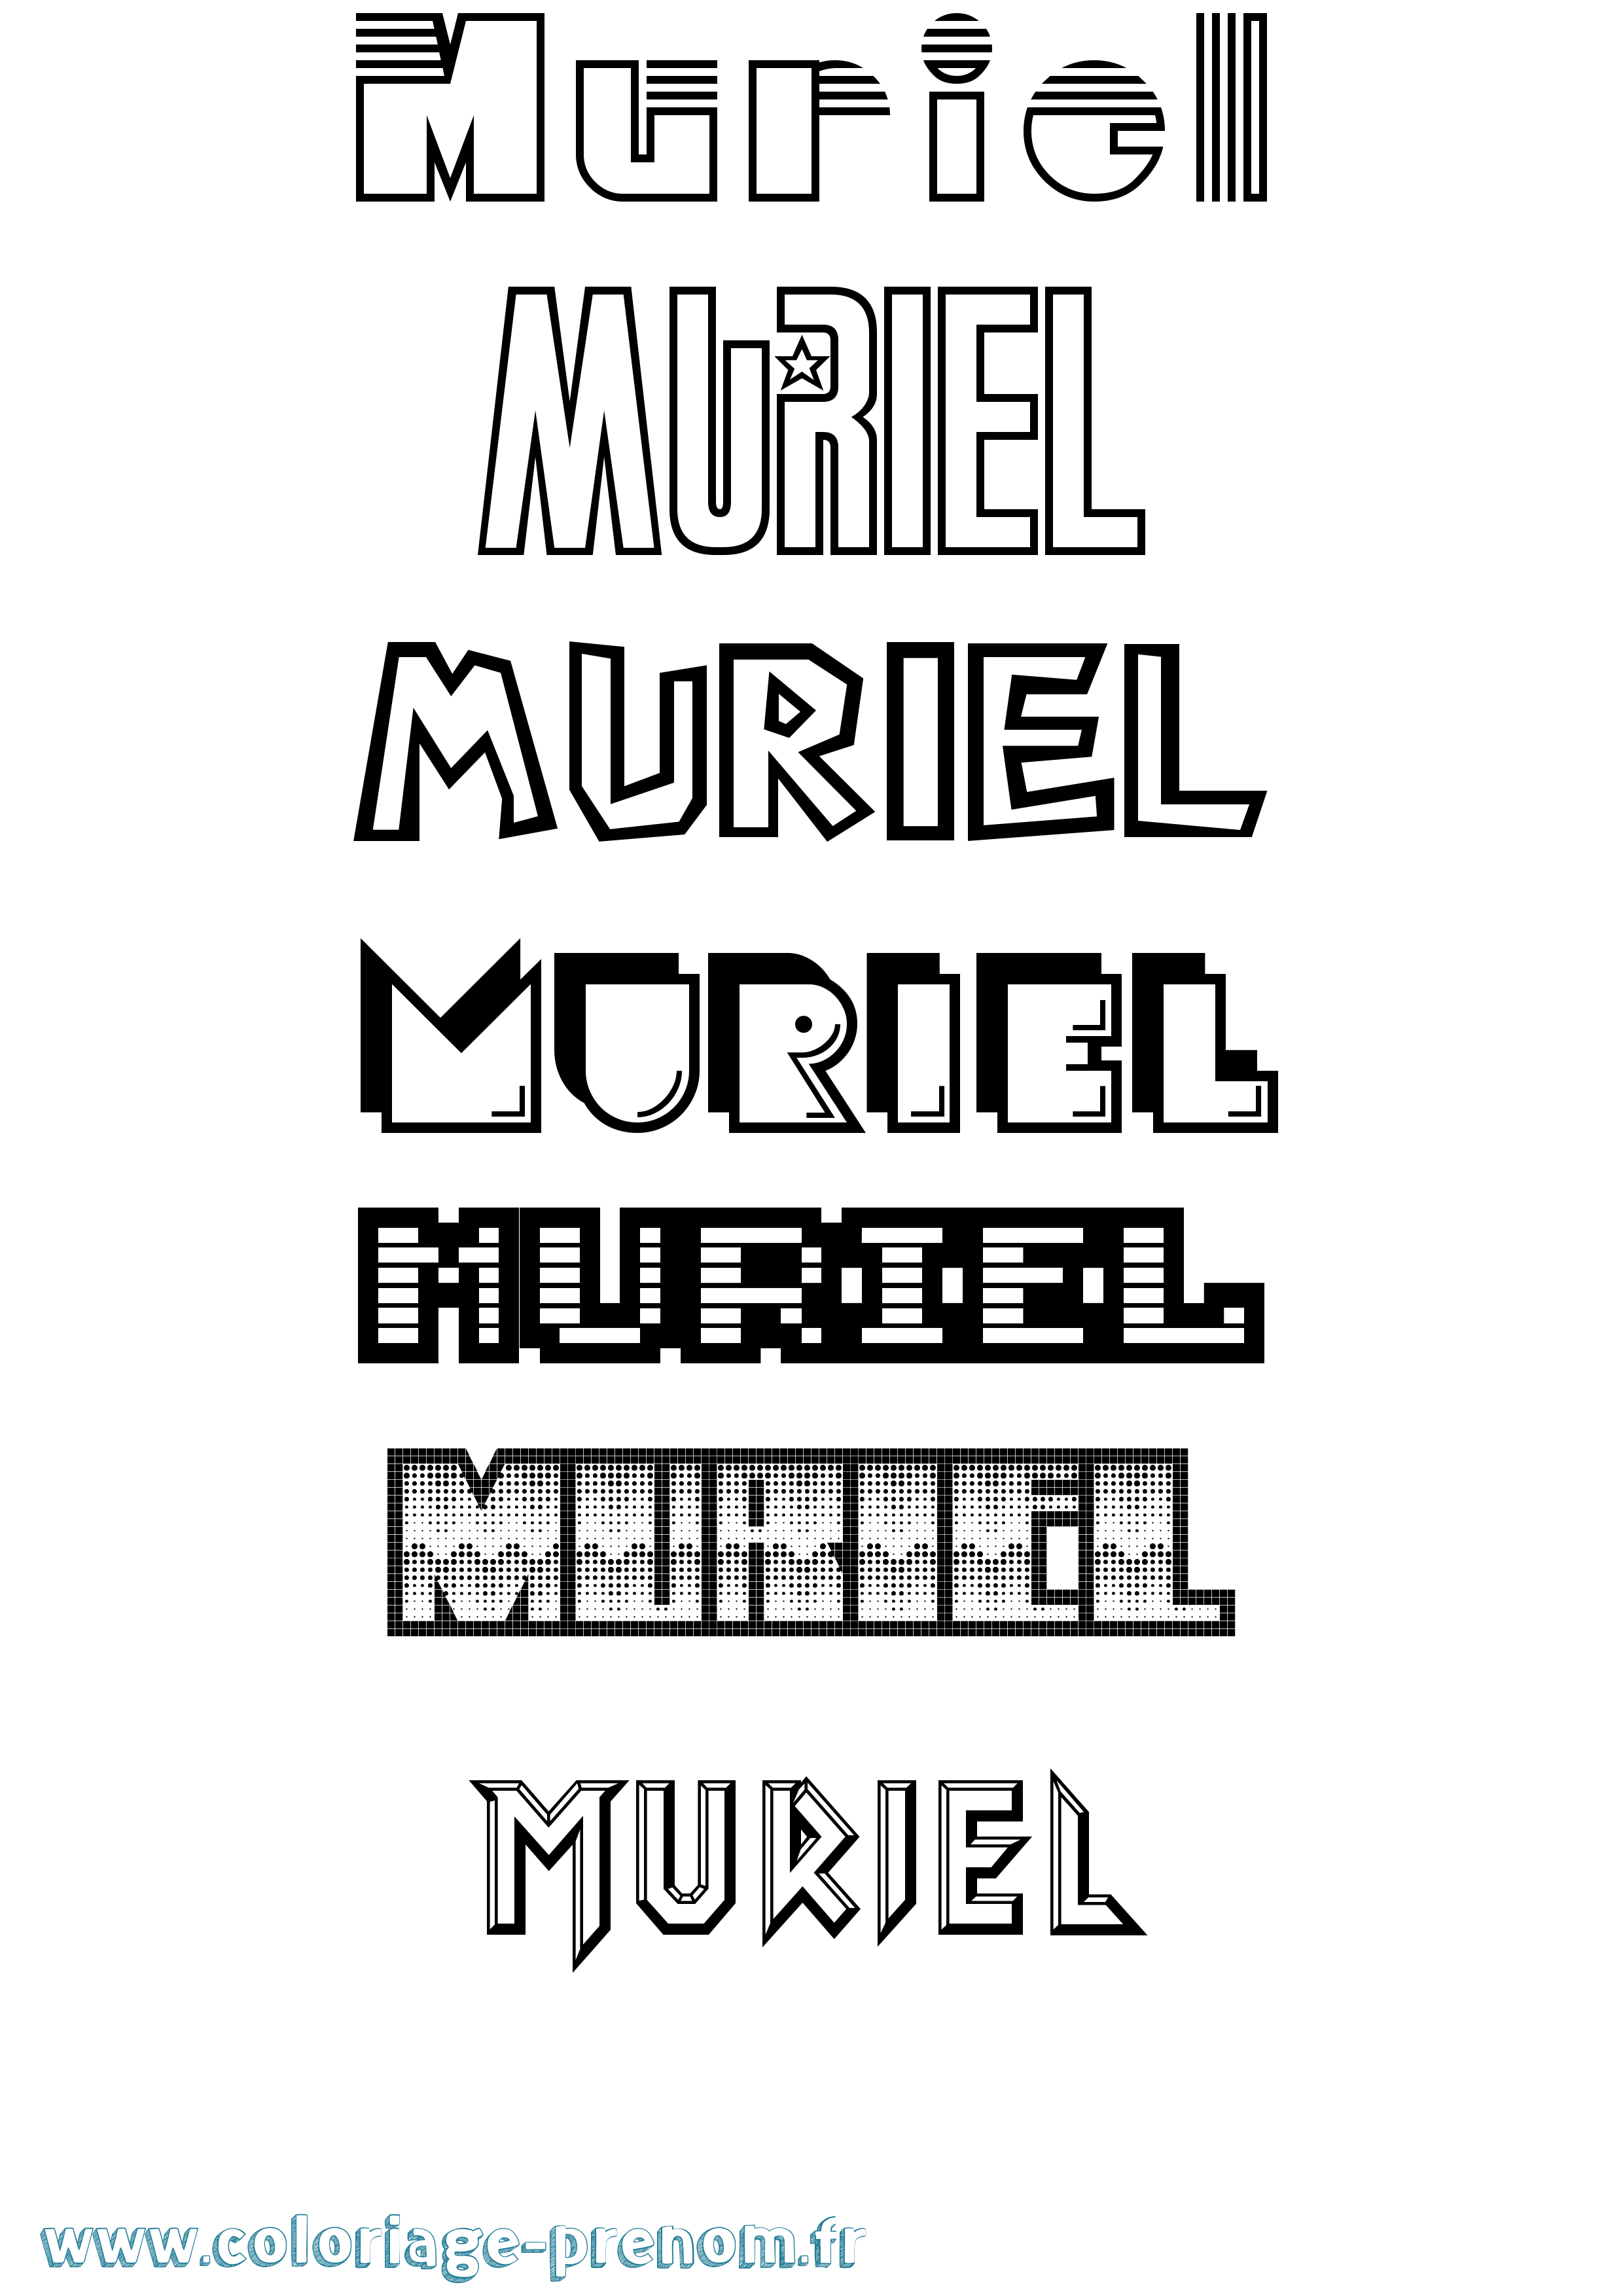 Coloriage prénom Muriel